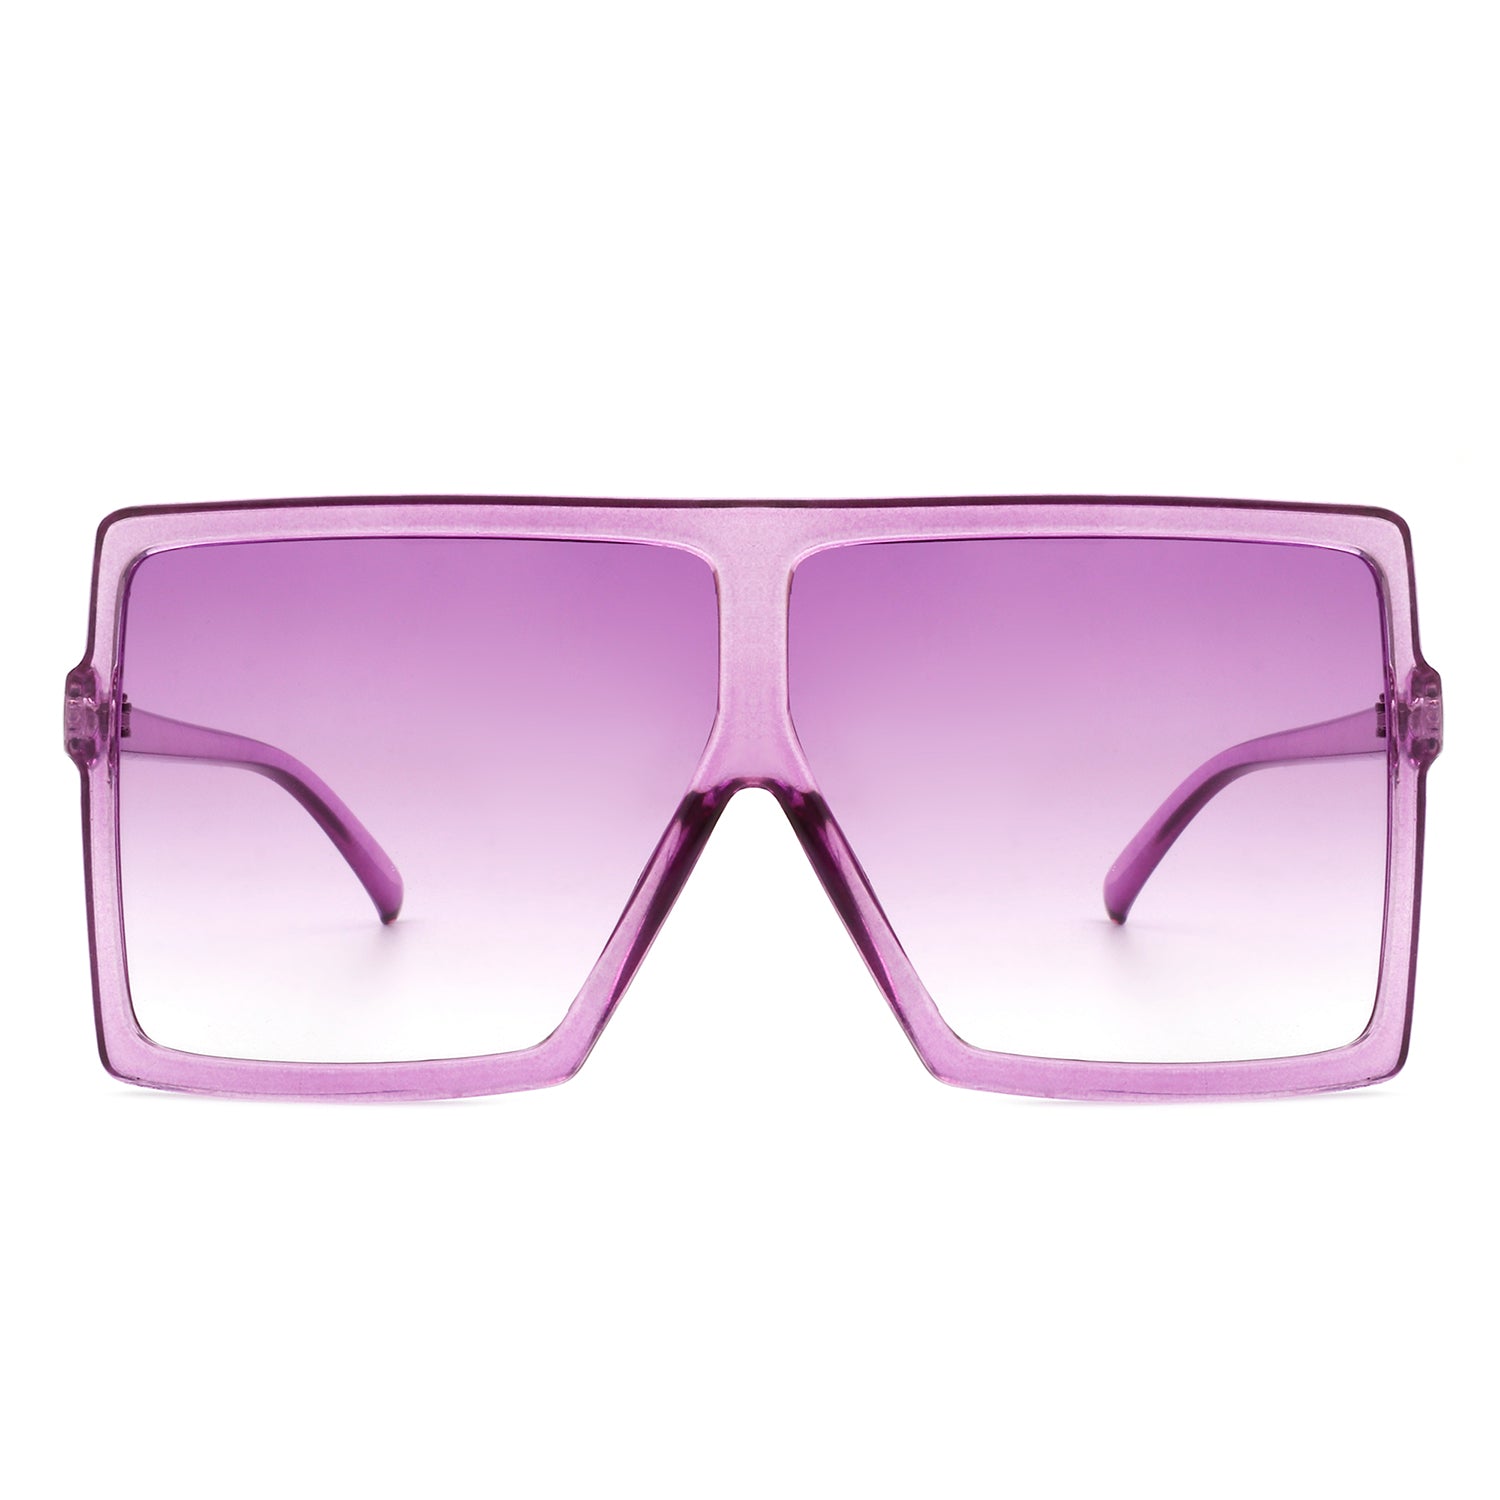 Zenithia Women's Oversize Flat Top Fashion Sunglasses